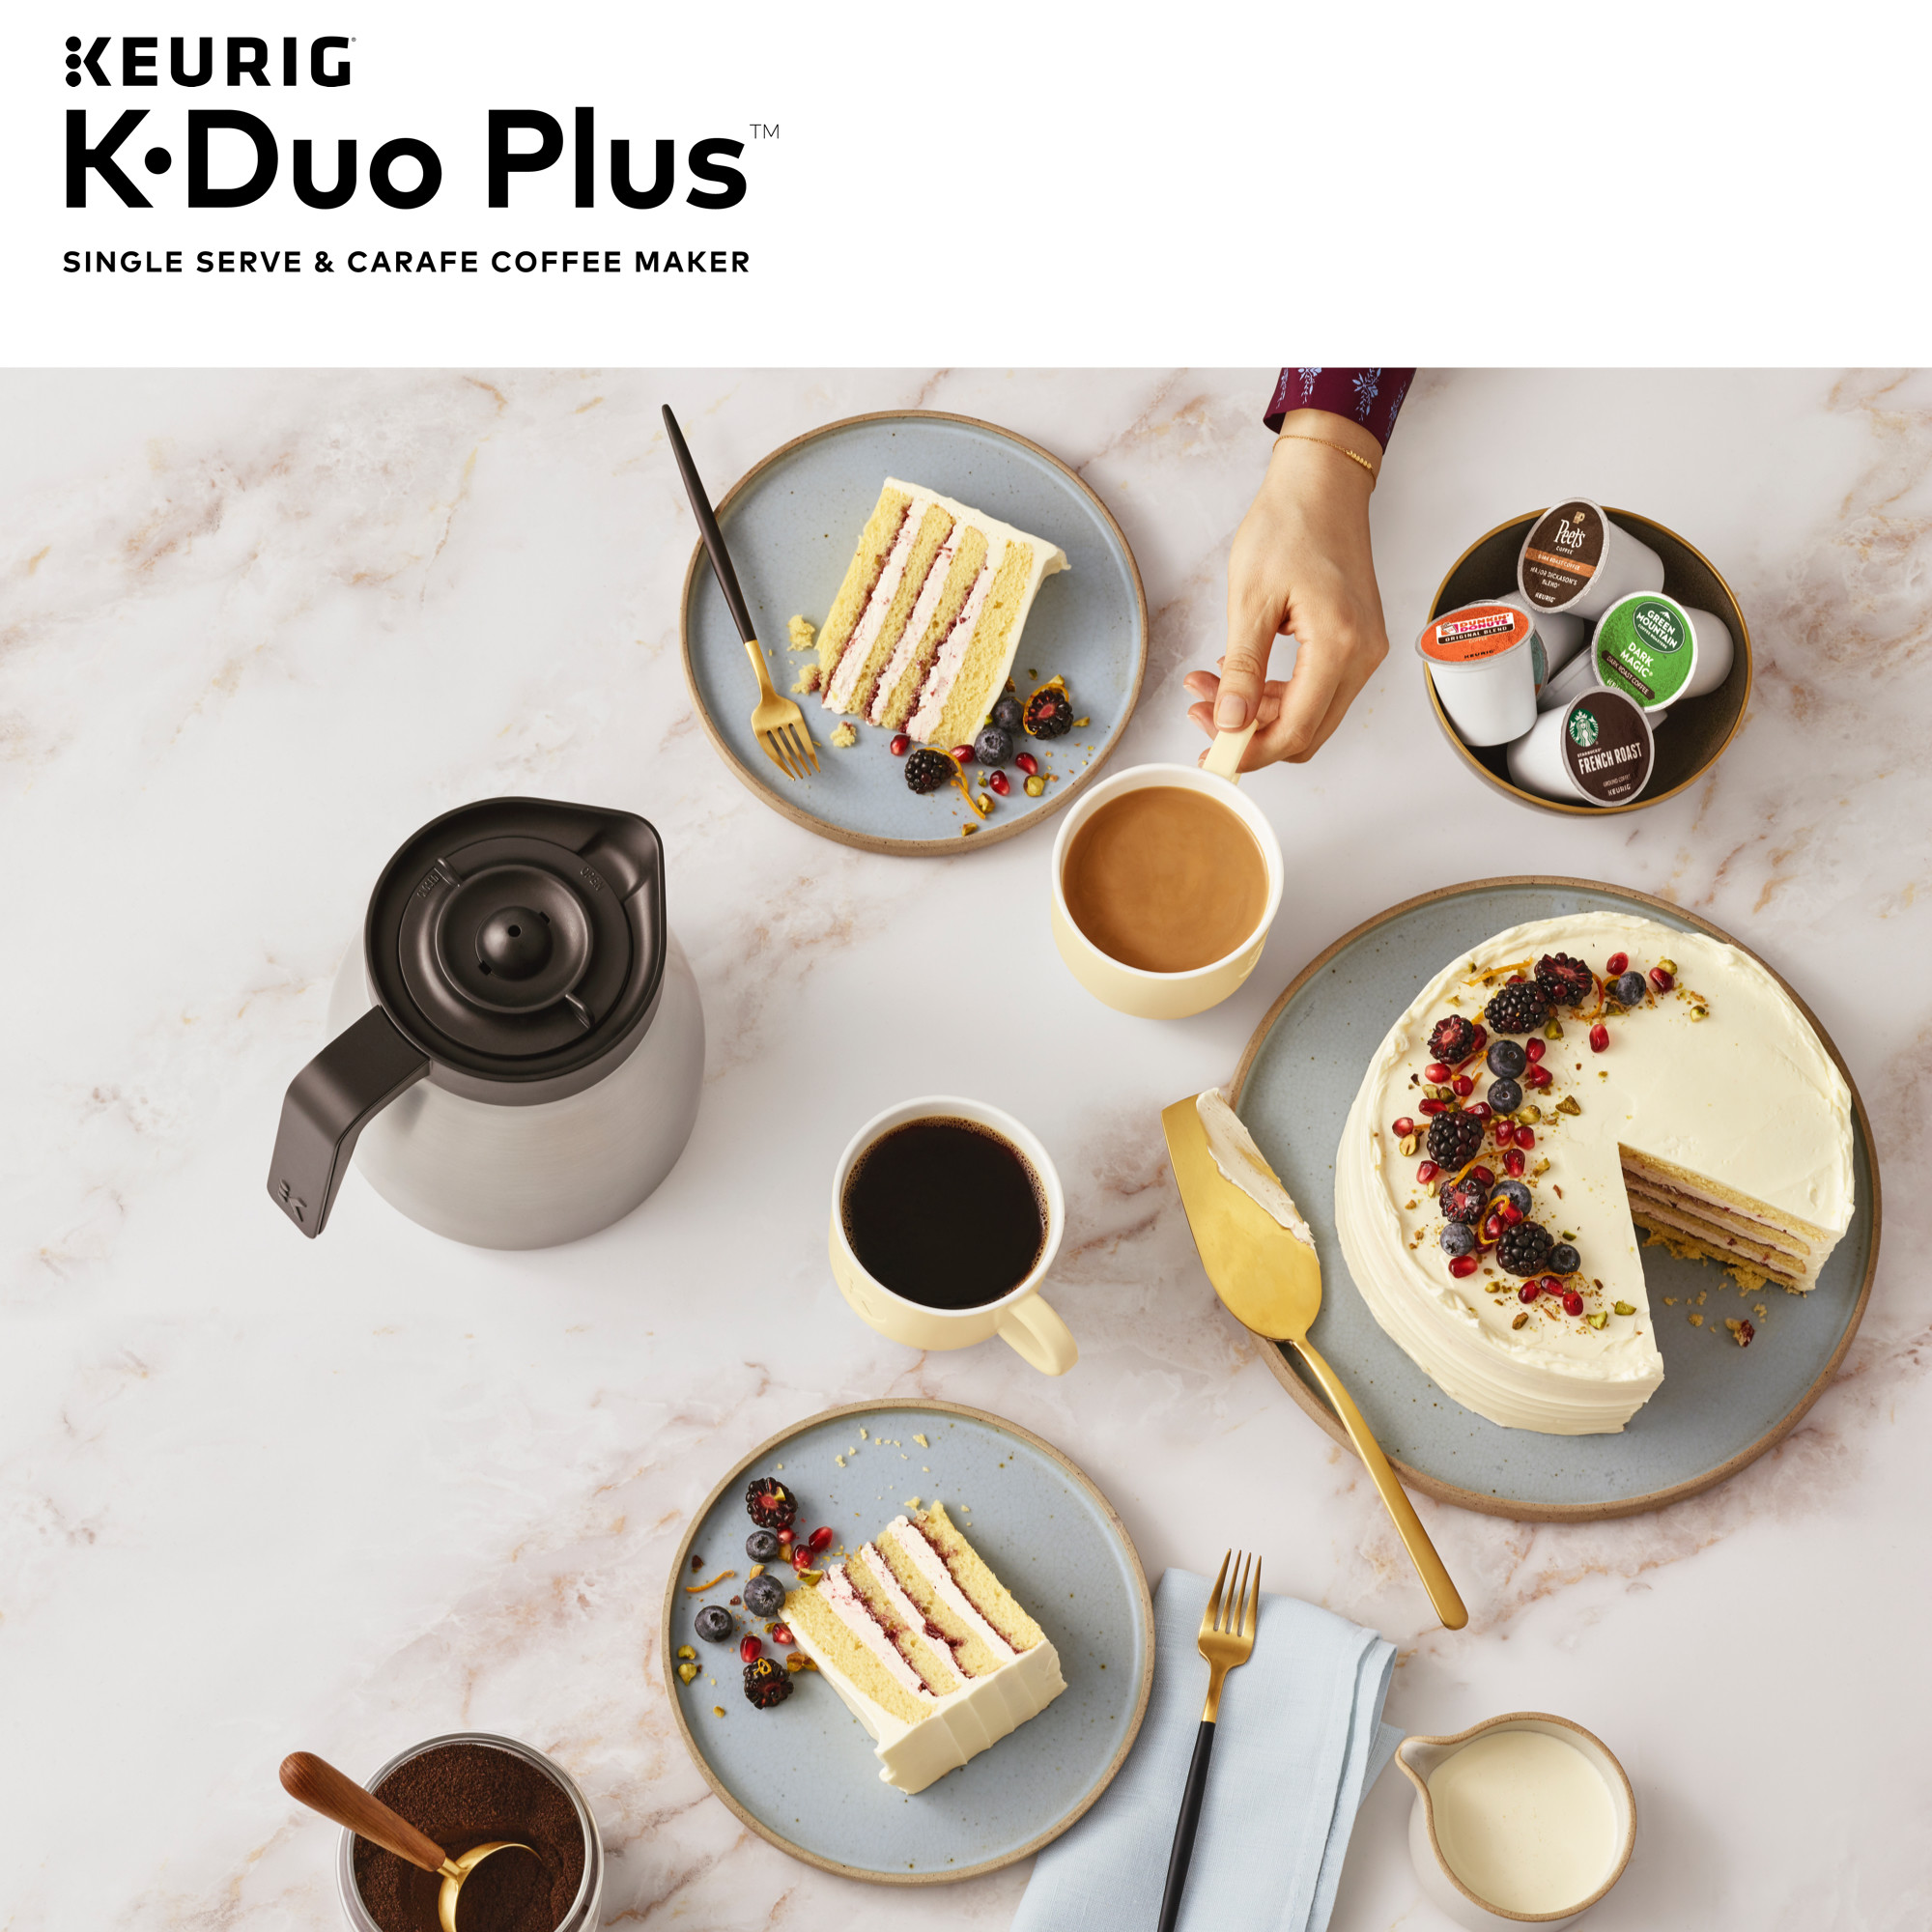 Keurig K-Duo Plus Single Serve & Carafe Coffee Maker - image 14 of 25